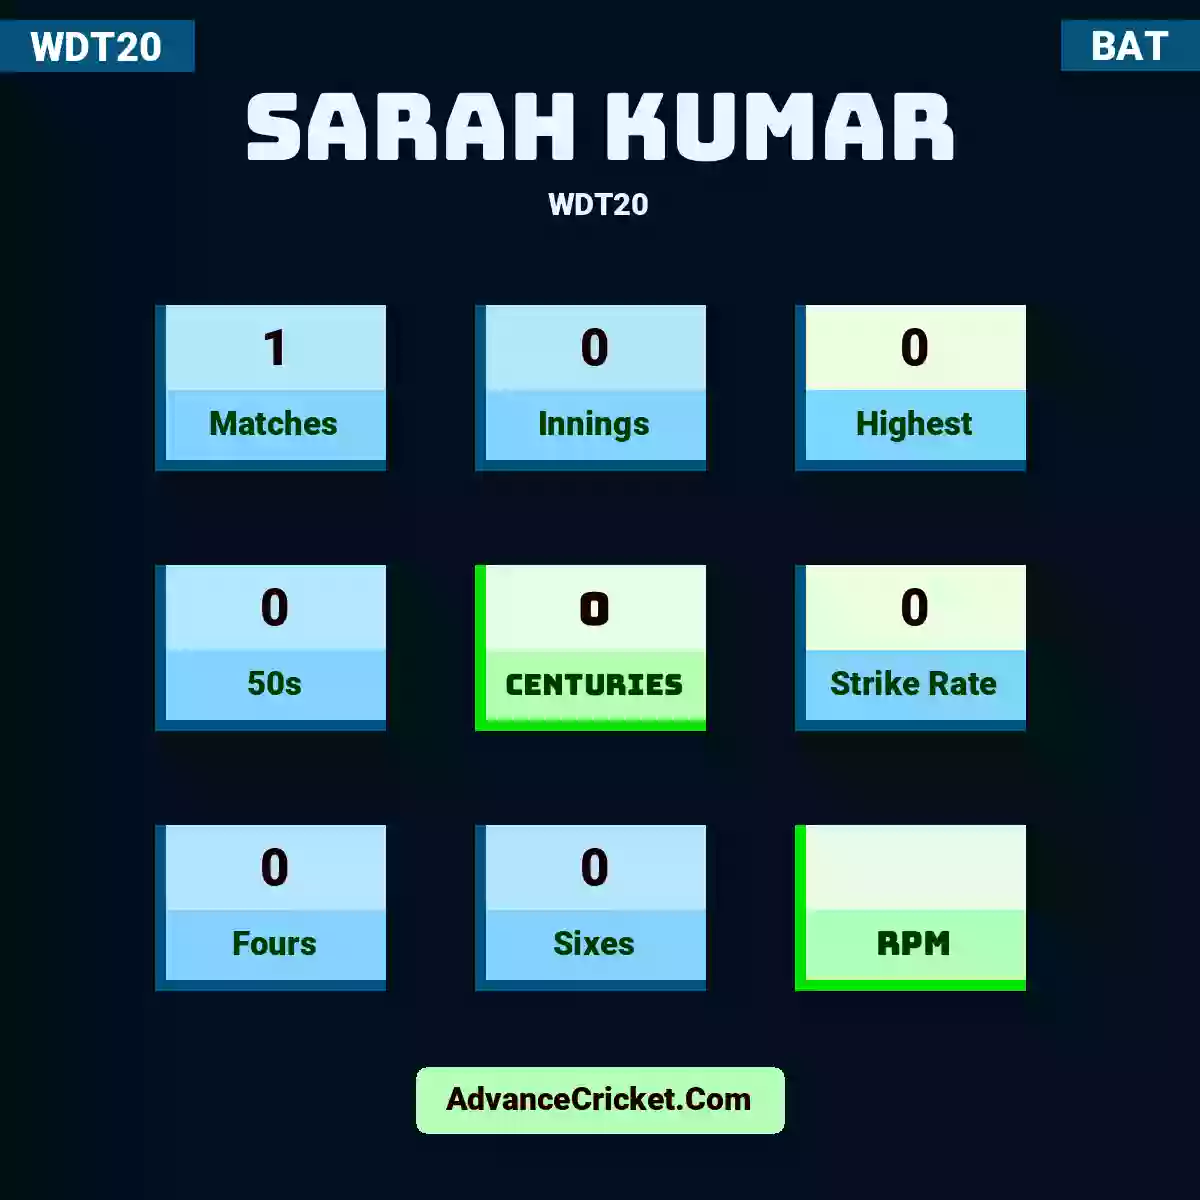 Sarah Kumar WDT20 , Sarah Kumar played 1 matches, scored 0 runs as highest, 0 half-centuries, and 0 centuries, with a strike rate of 0. S.Kumar hit 0 fours and 0 sixes.